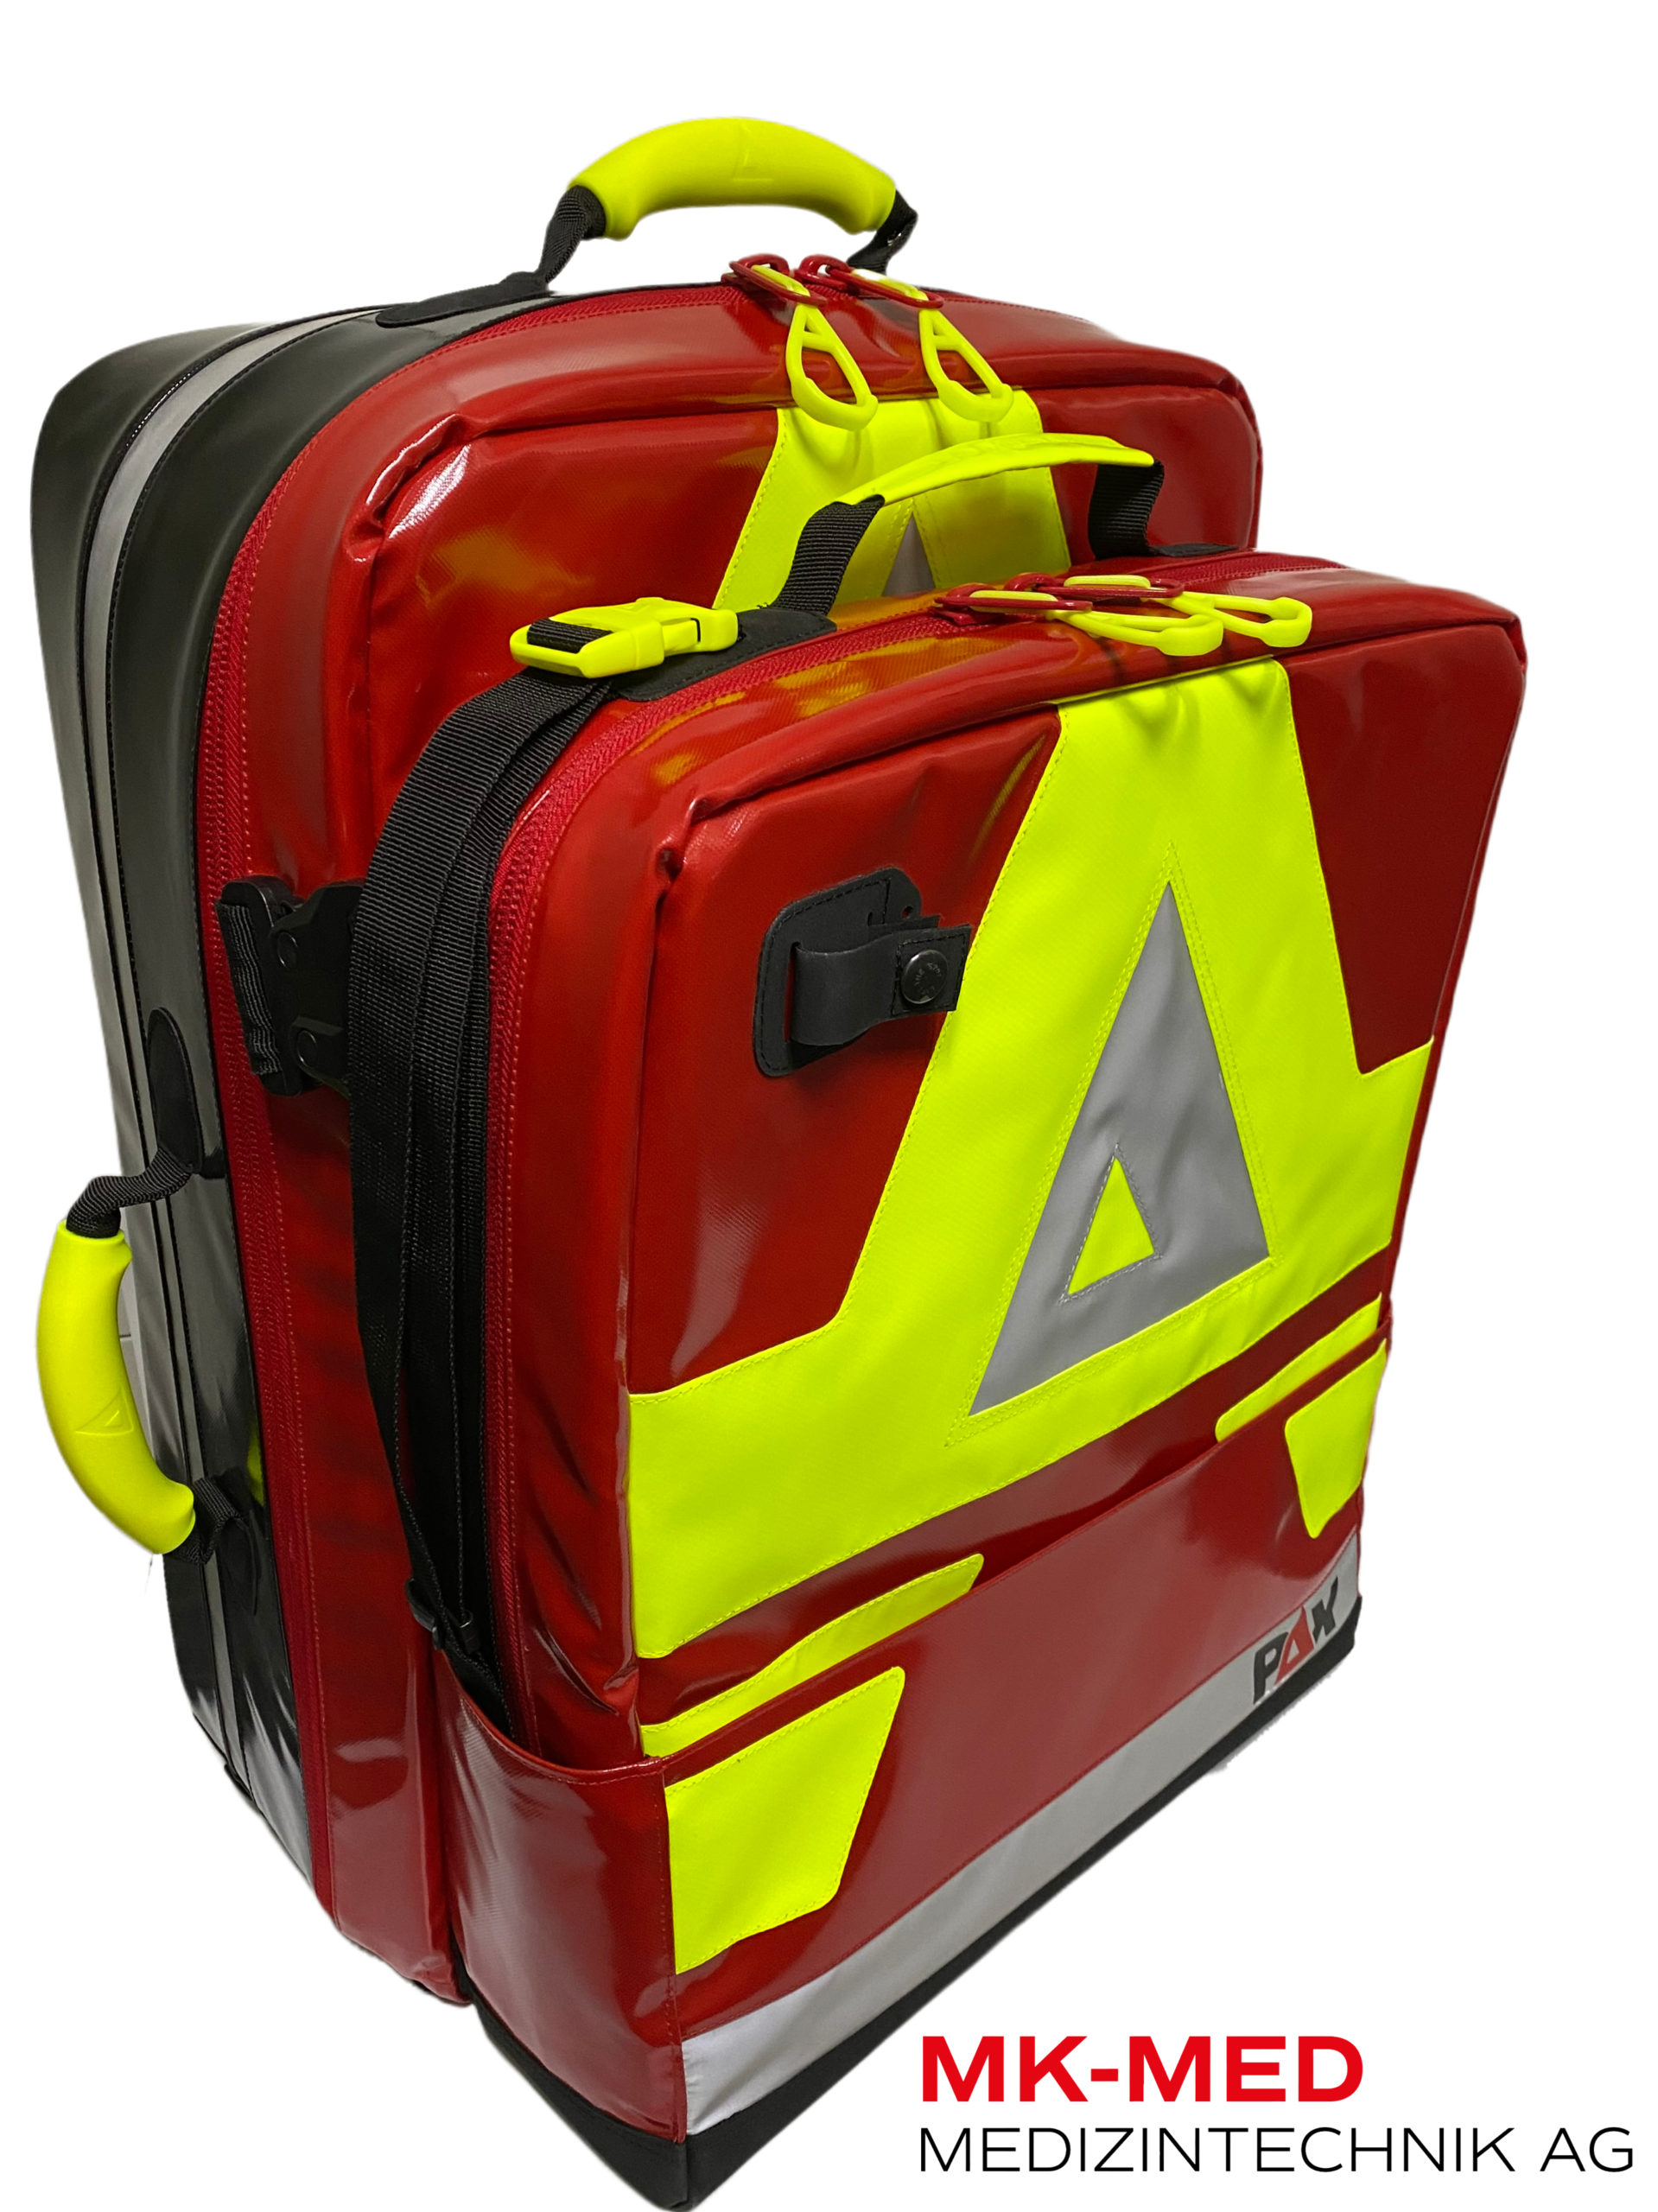 PAX Combi Backpack-Incl. integrated airway - Medizintechnik